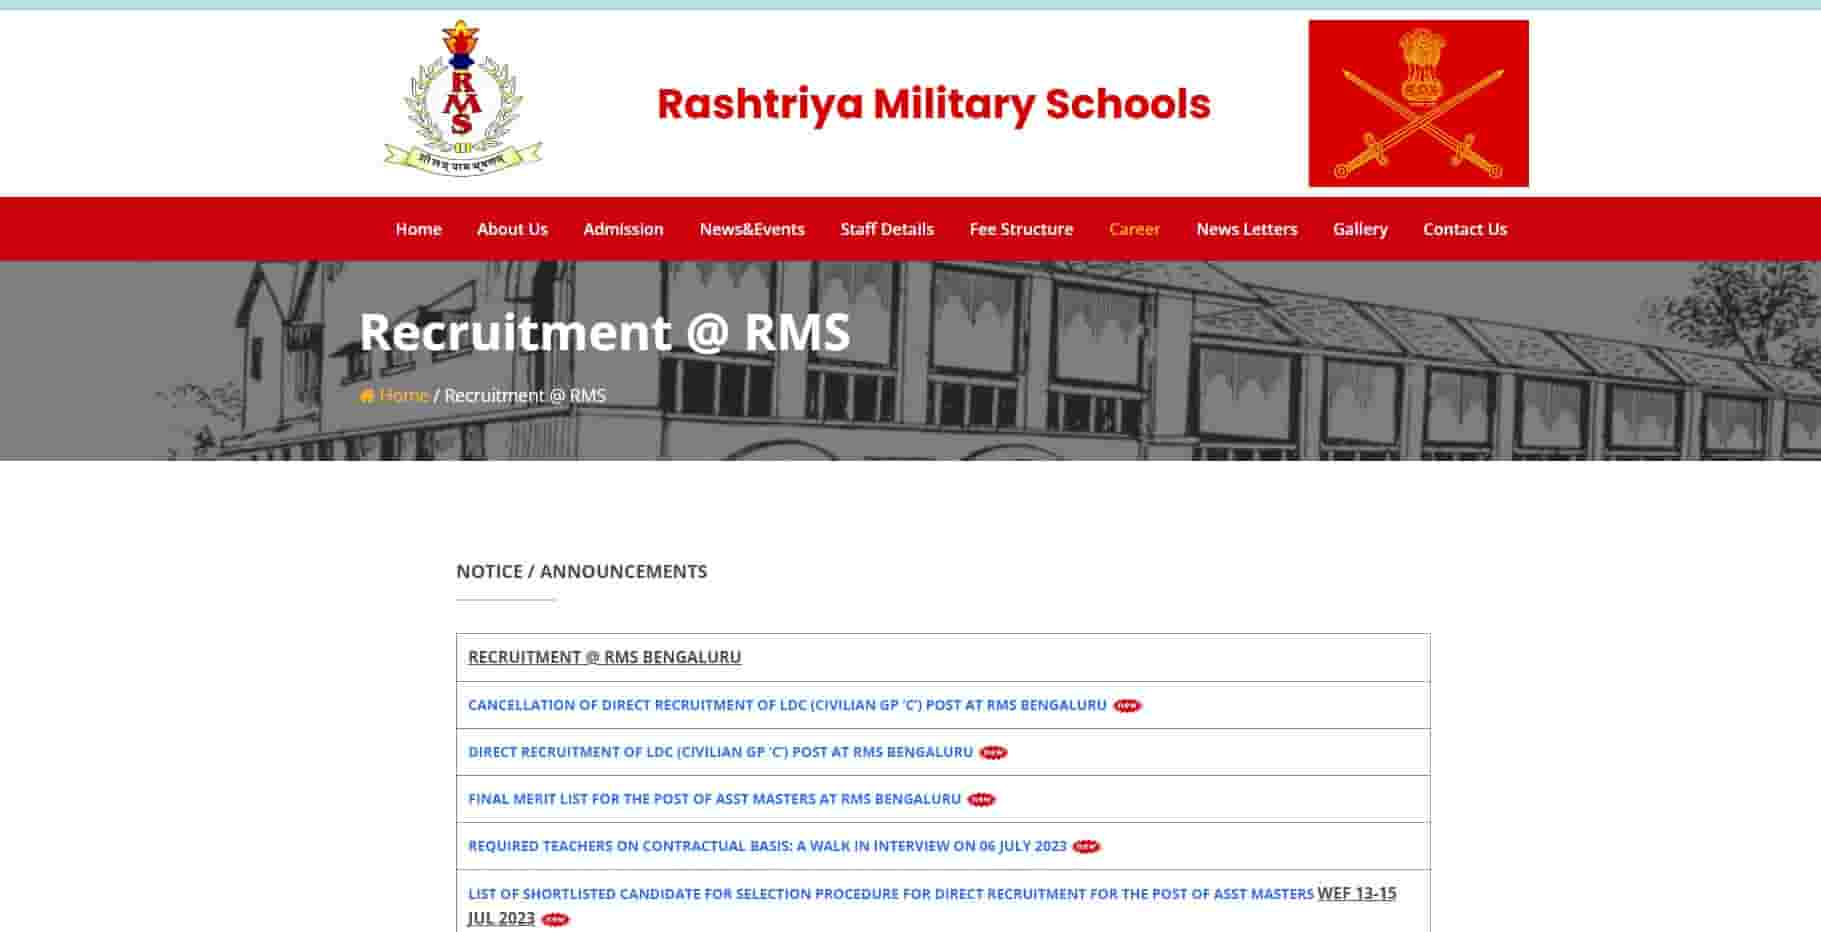 How to Apply Rashtriya Military School Recruitment 2023